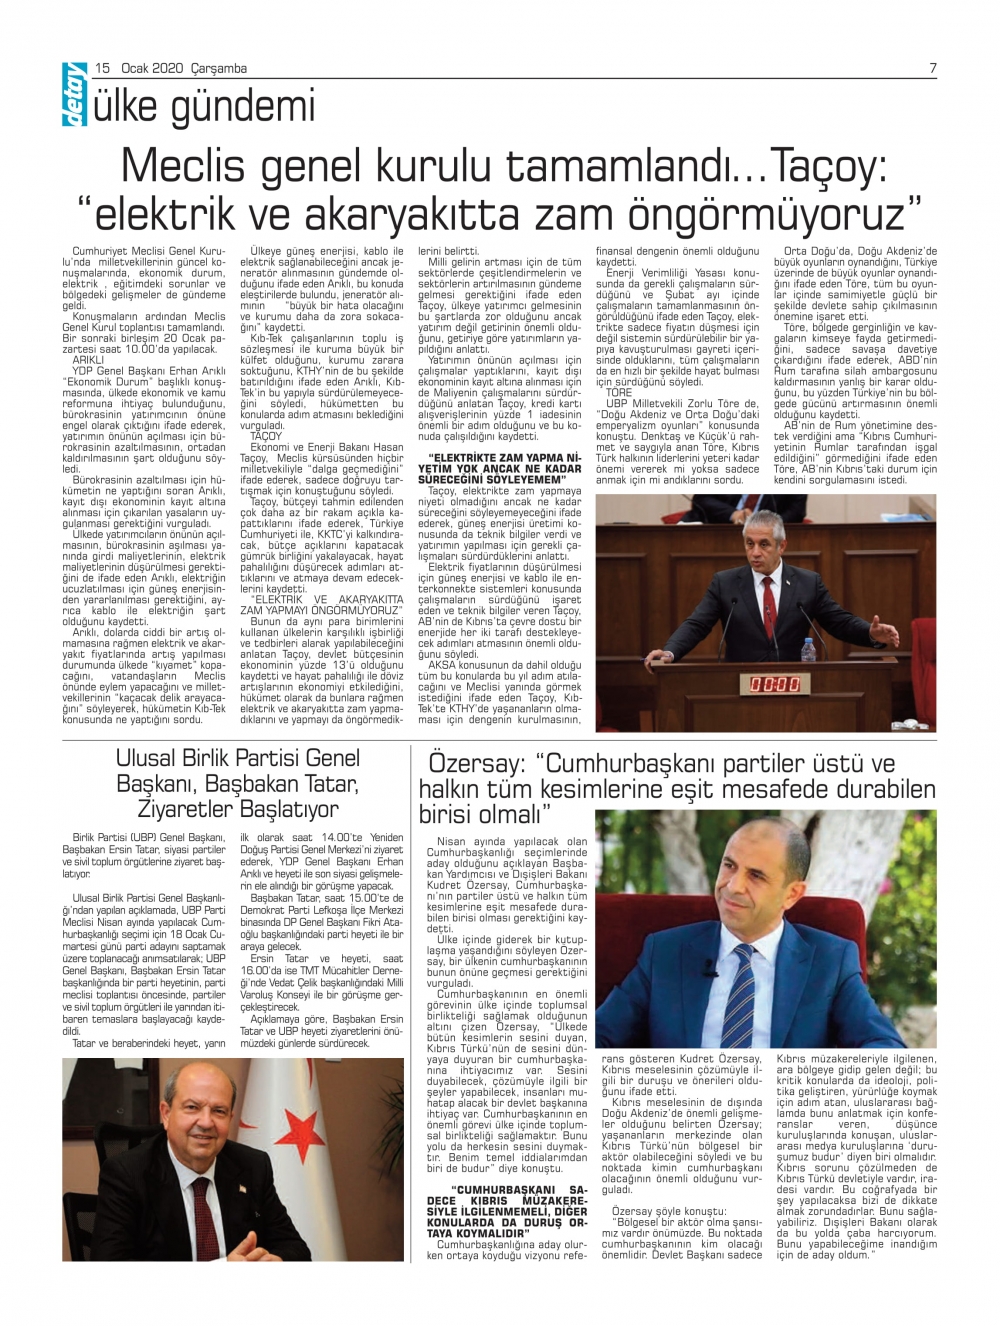 Detay Gazetes 15 Ocak 2020 galerisi resim 7